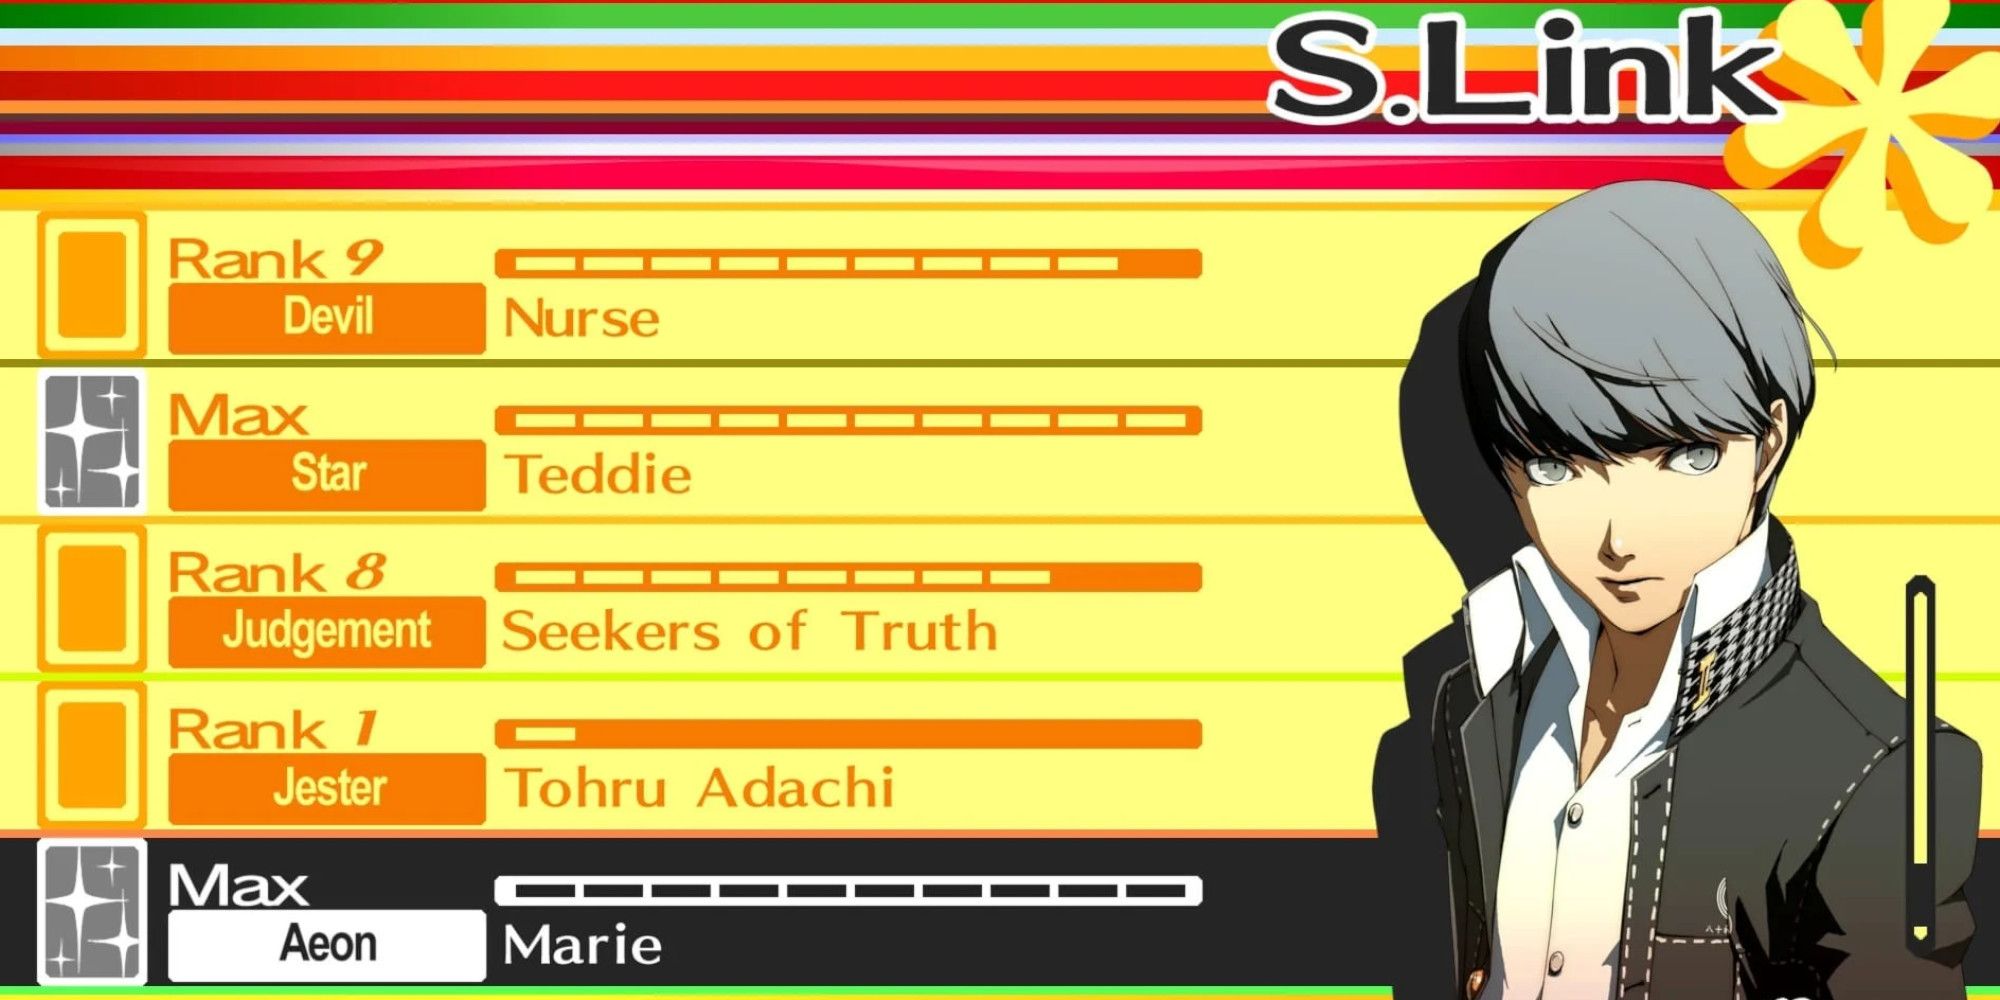 Yu Narukami's various social links in Persona 4 Golden